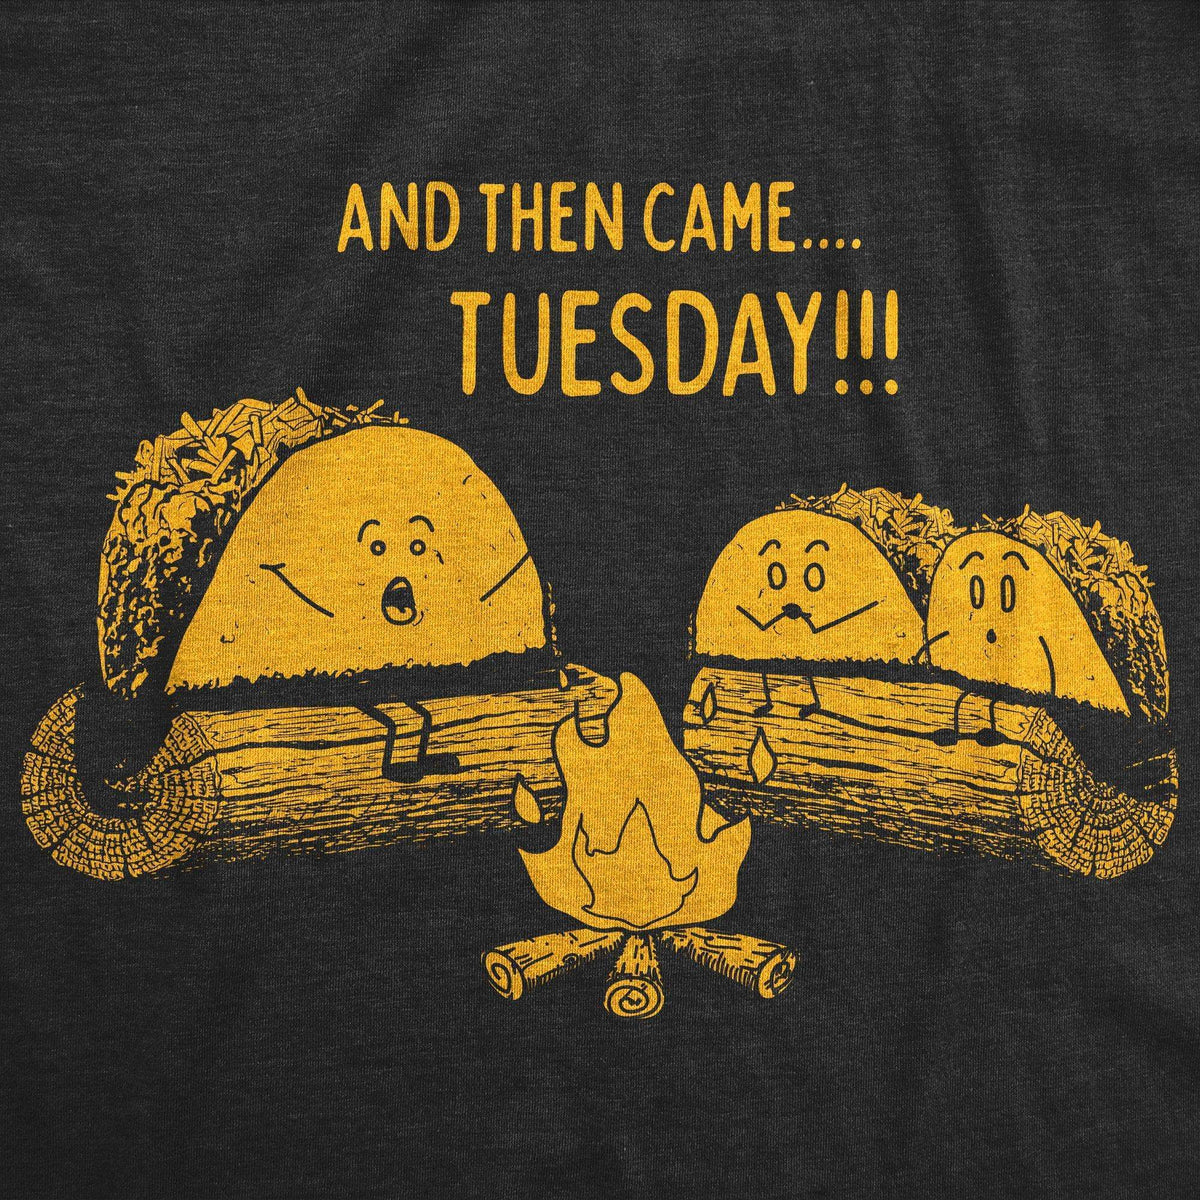 Taco Tuesday Ghost Story Women&#39;s Tshirt - Crazy Dog T-Shirts